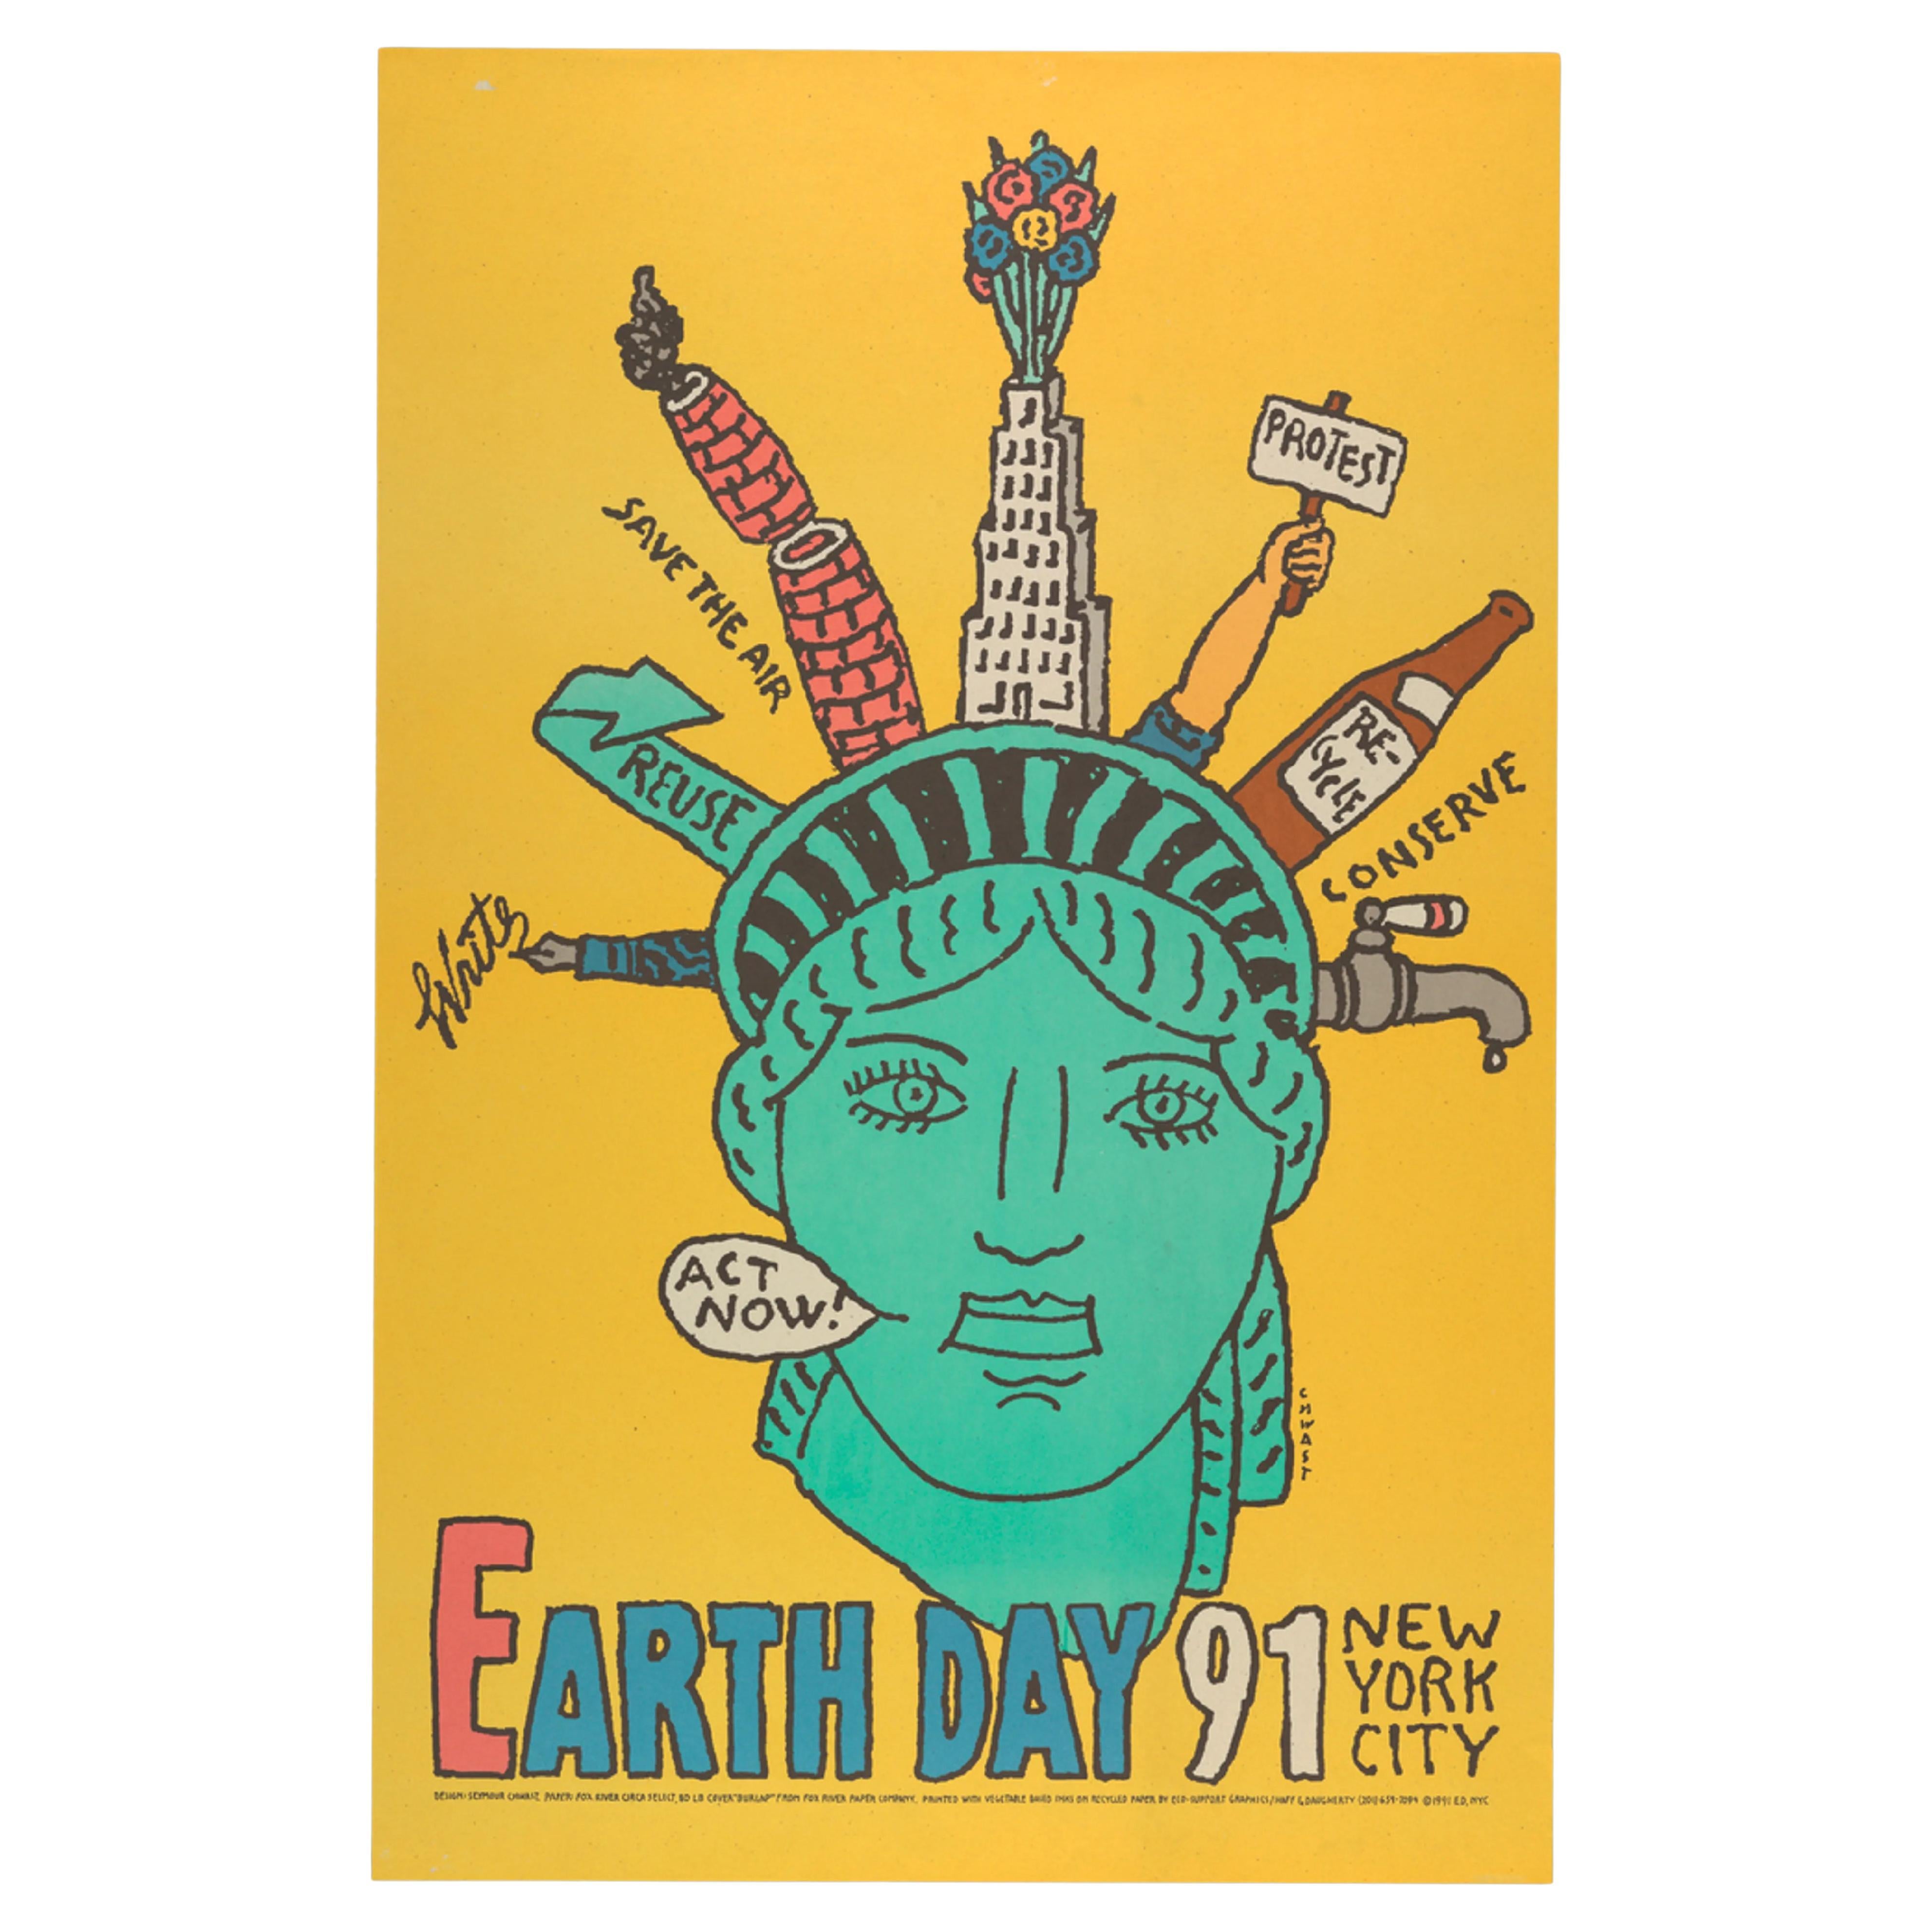 Earth Day 1991 New York City – Vintage Pop-Art-Poster von Seymour Chwast, Earth Day